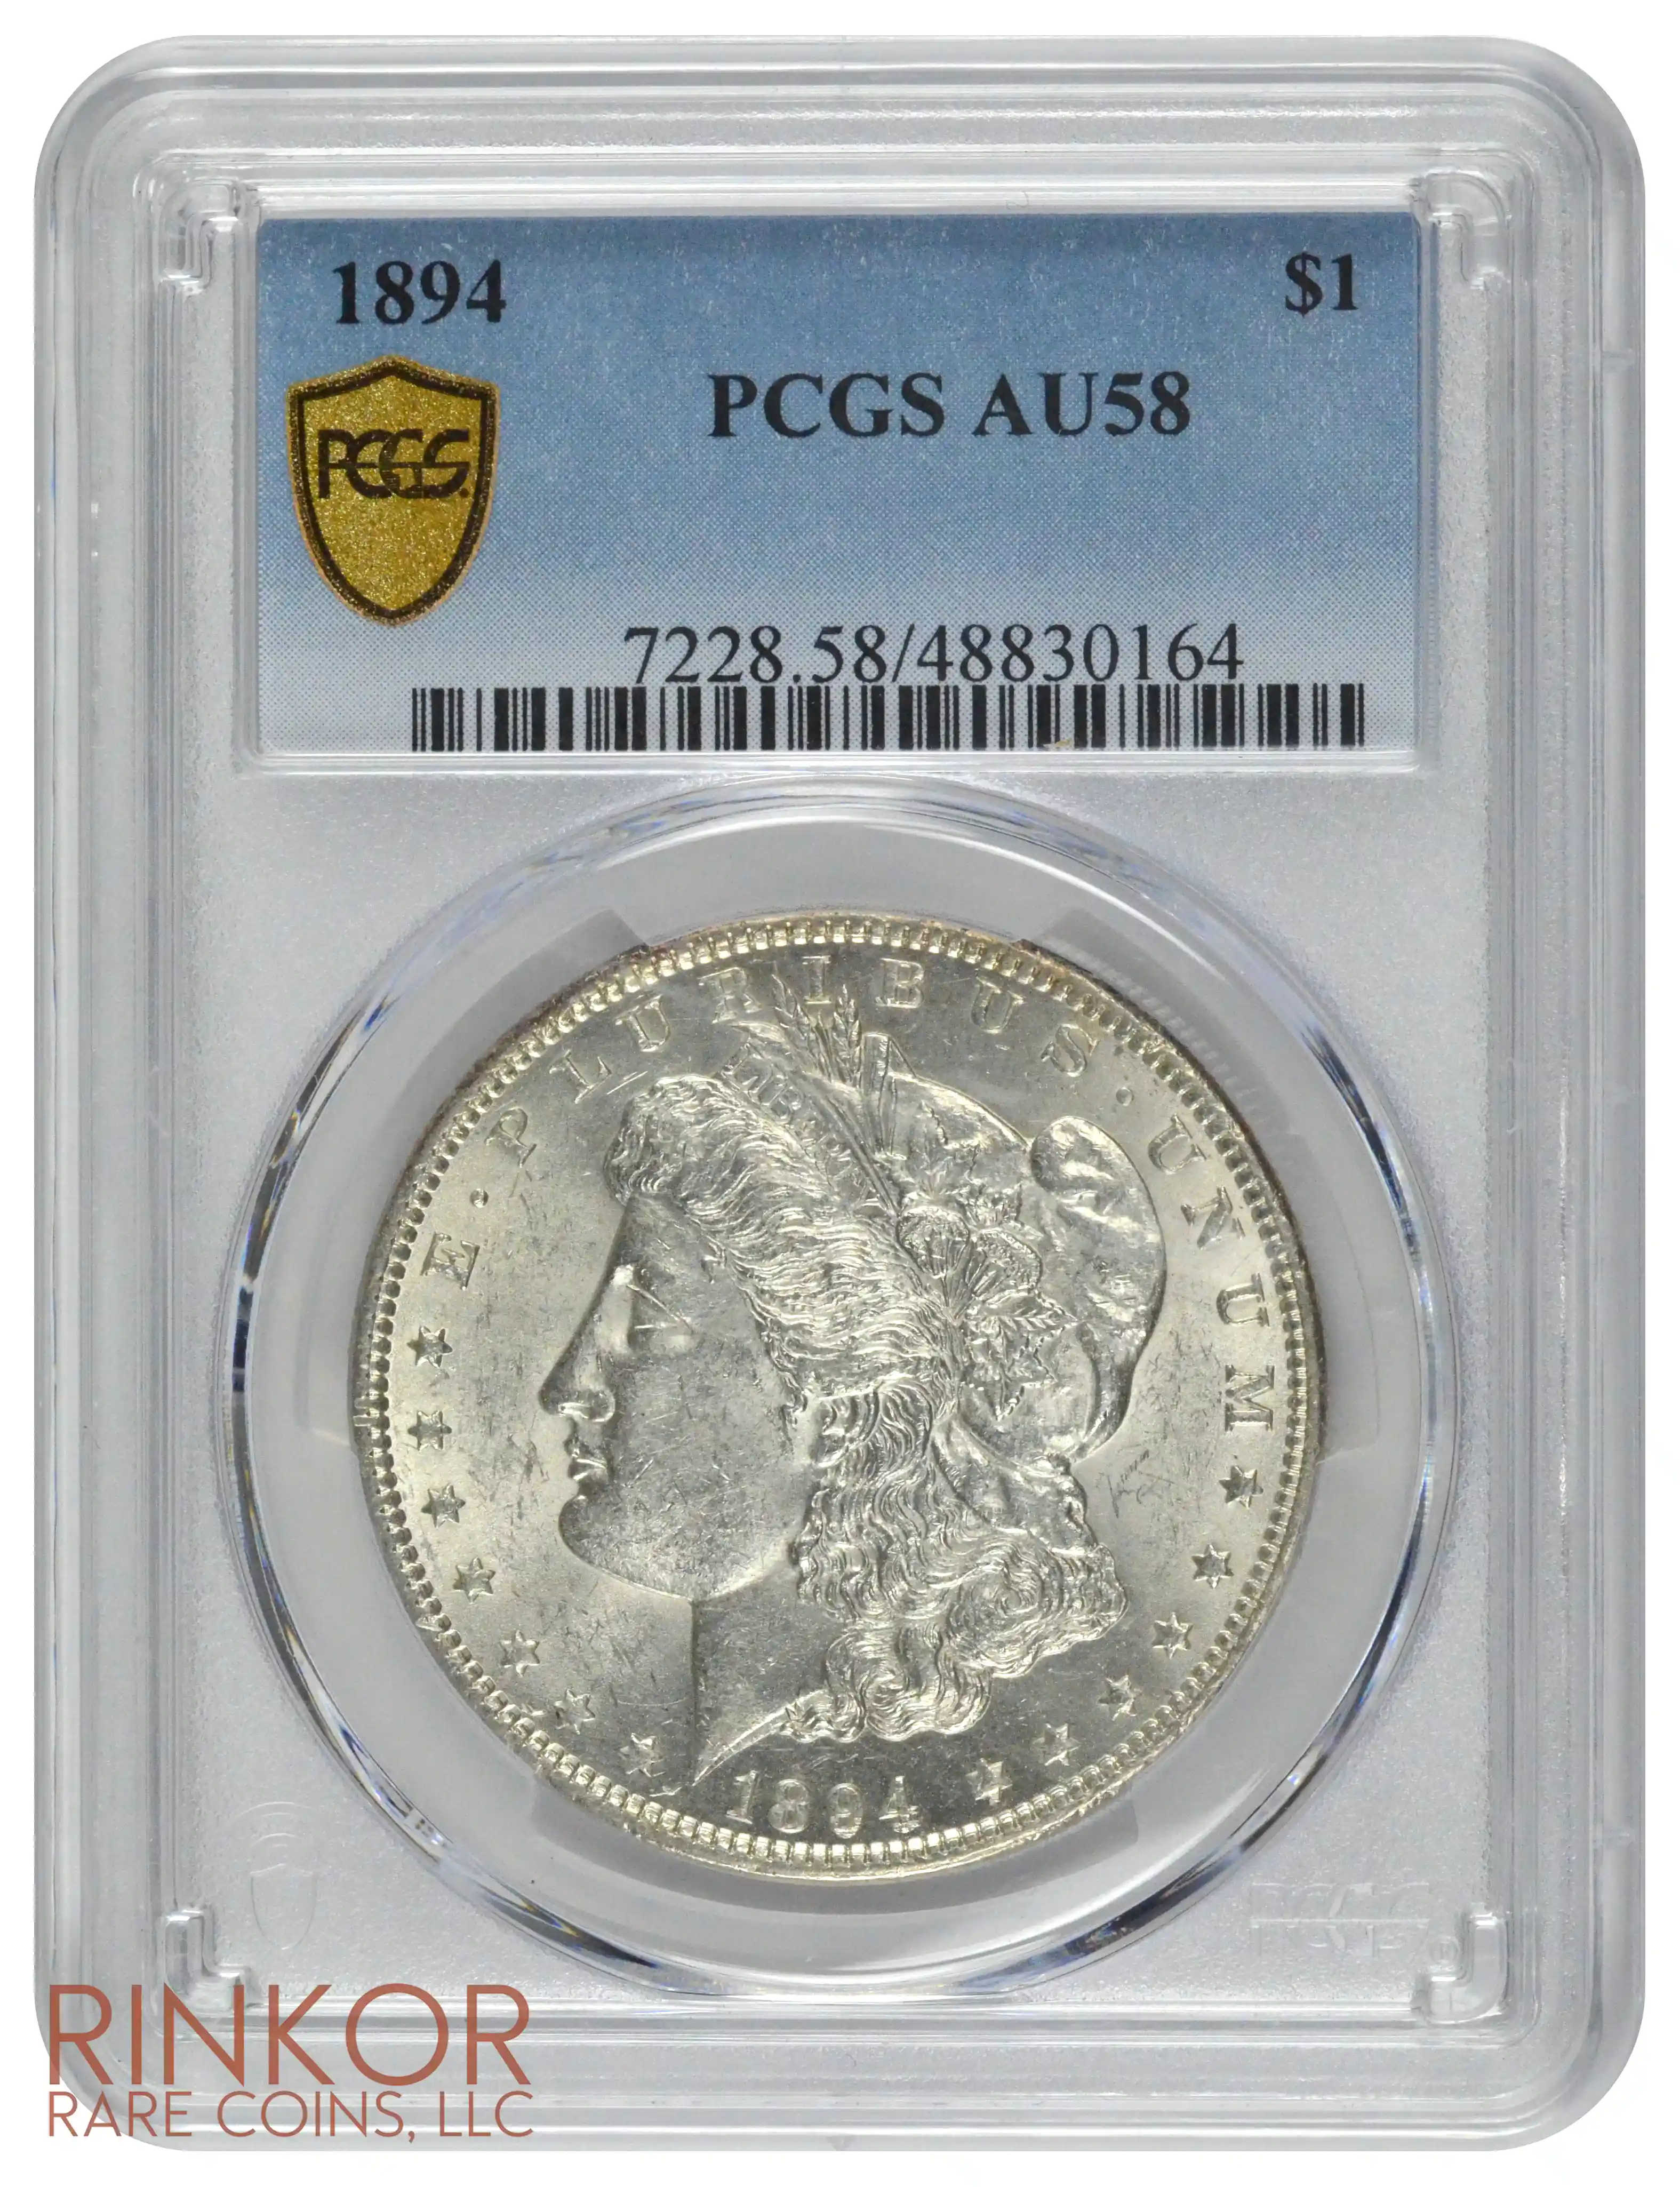 1894 $1 PCGS AU-58